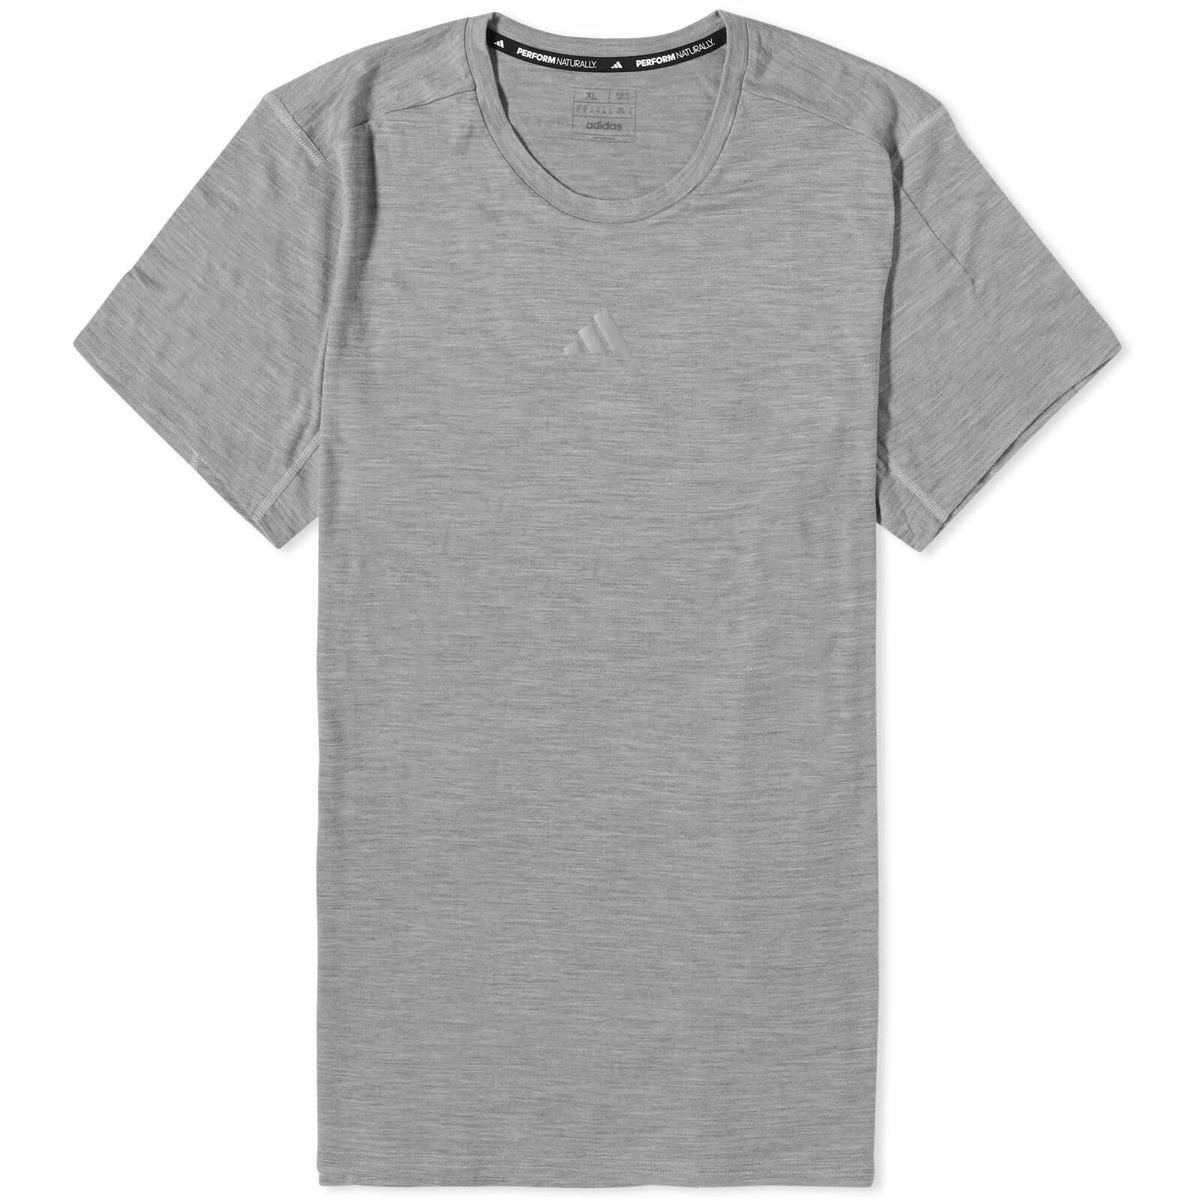 Adidas Ultimate ClimaLite T-Shirt Grey Large Affordable Designer Brands